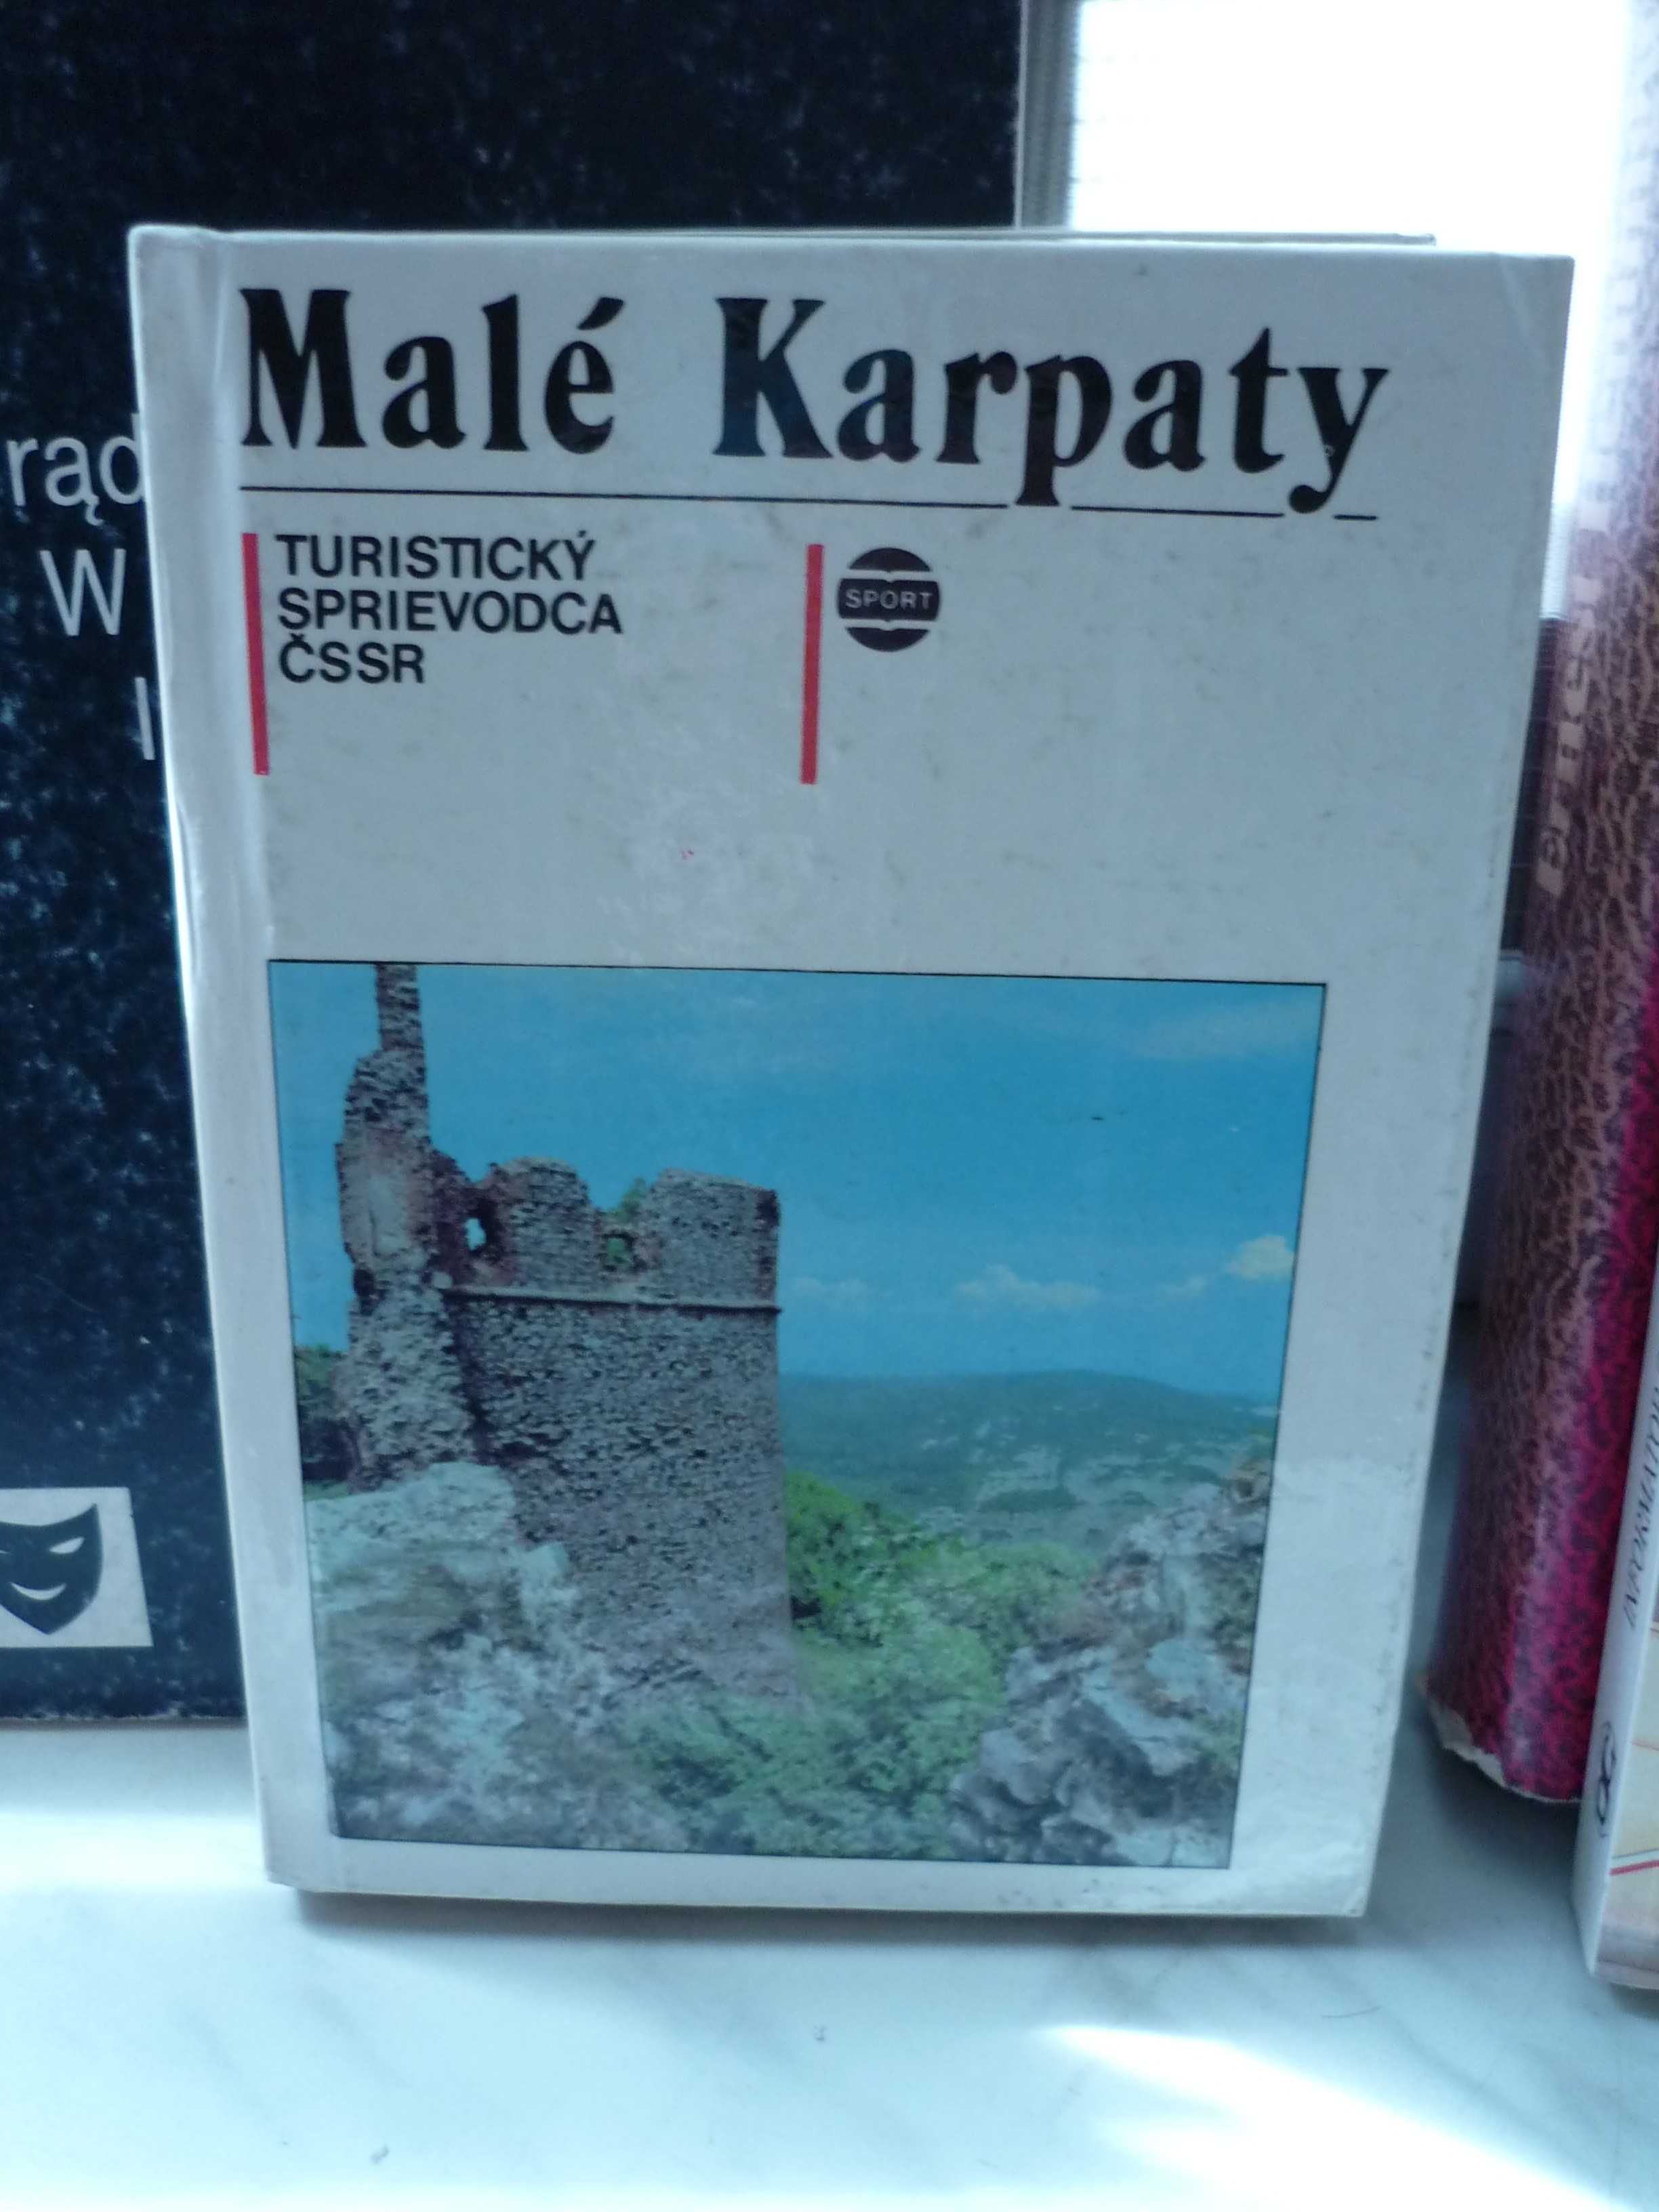 Male Karpaty , Turisticky sprievodca CSSR